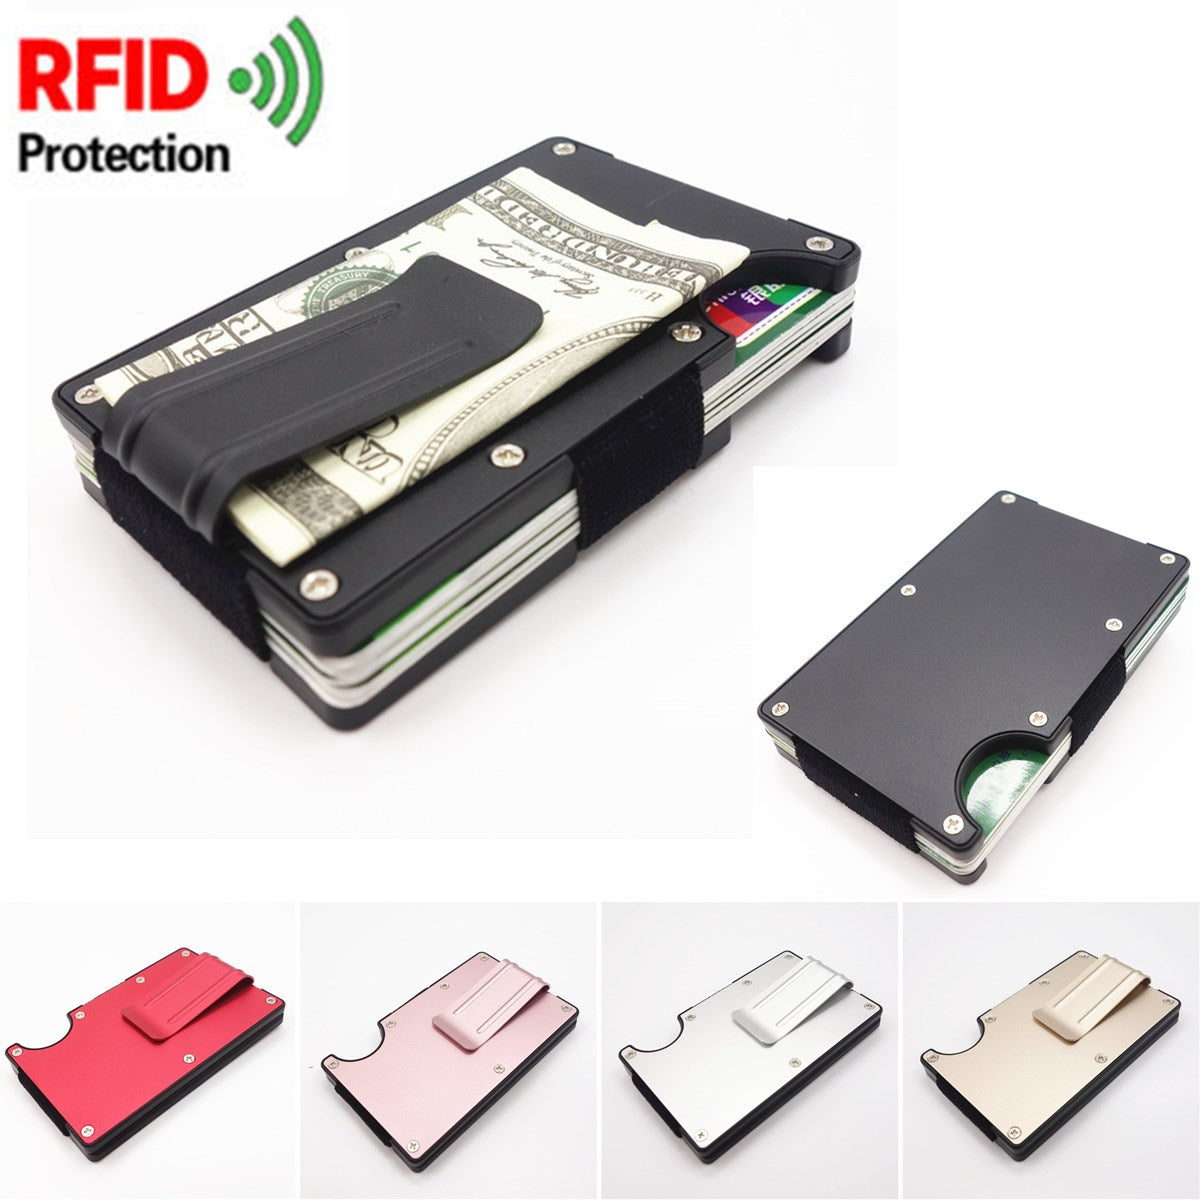 RFID Blocking Metal Wallet Slim Minimalist Credit Card Holder Money Clip